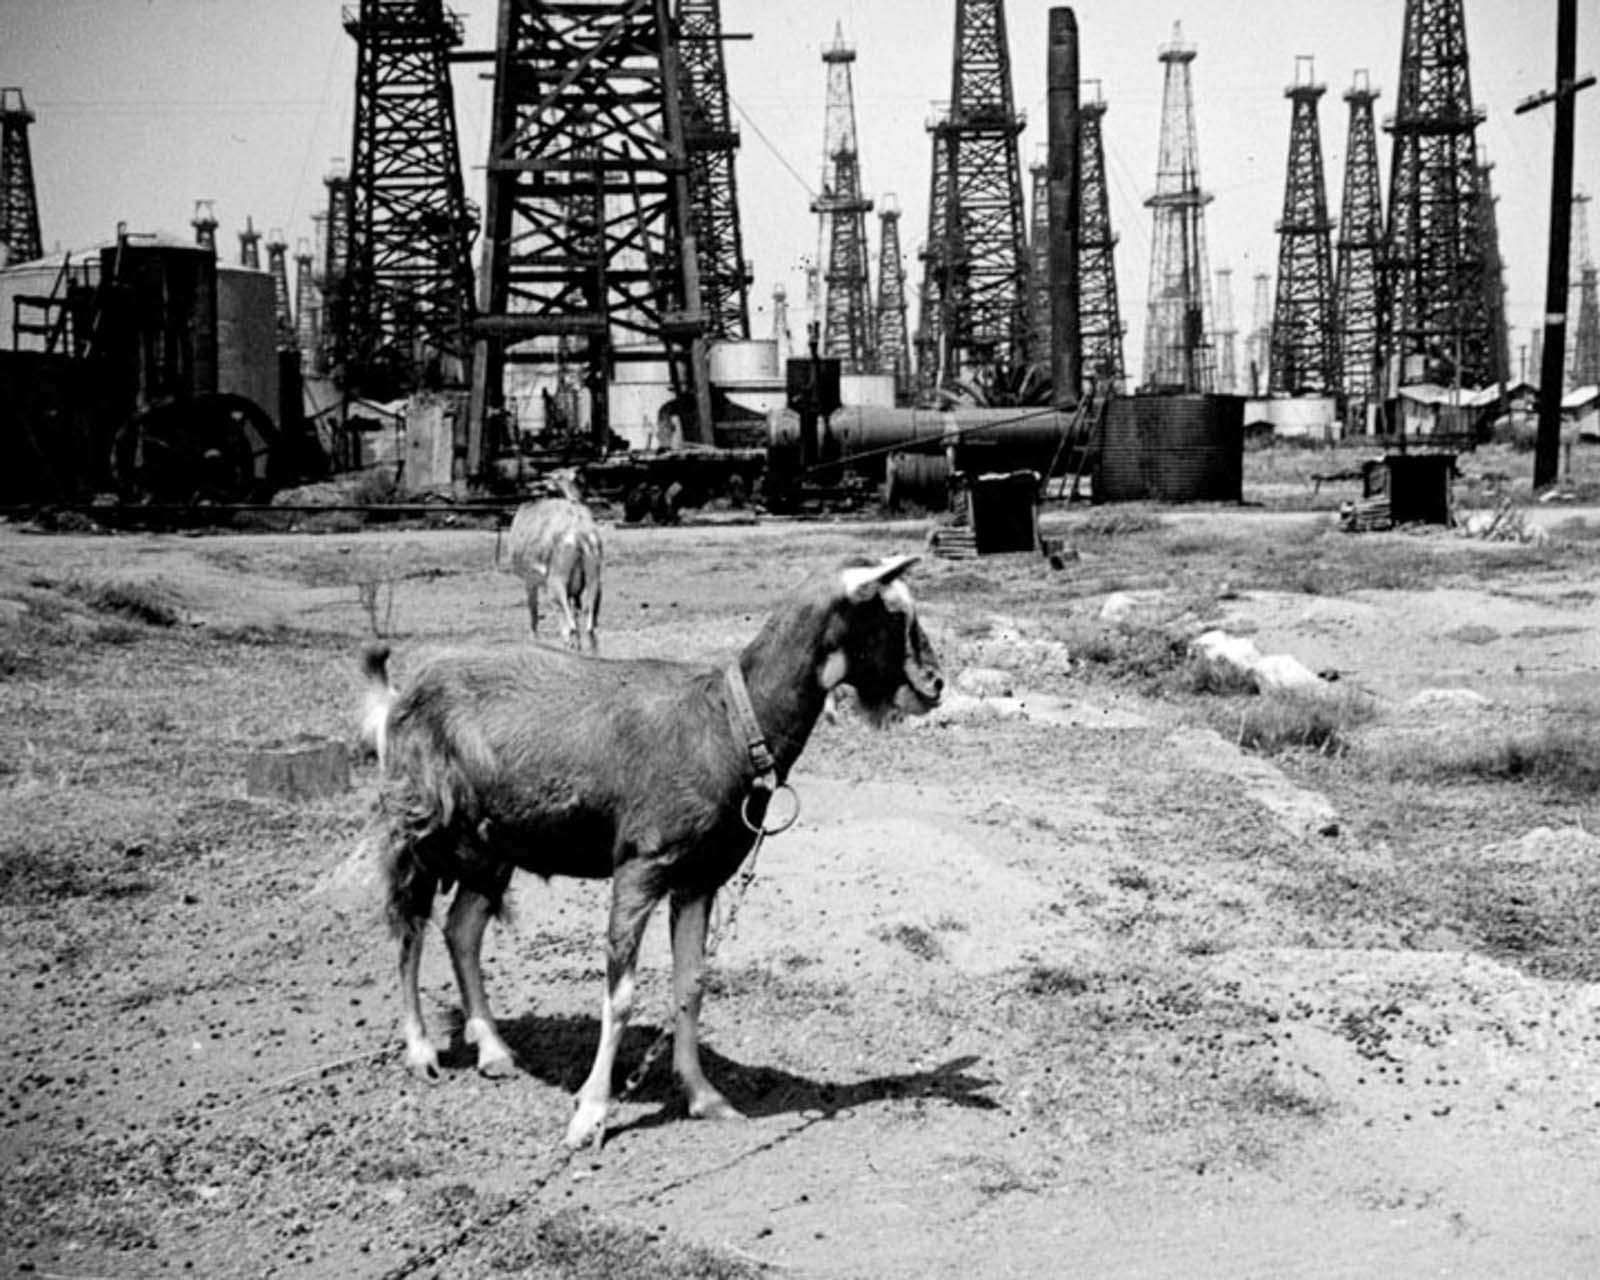 Goats near an oilfield in Huntington Beach, 1937